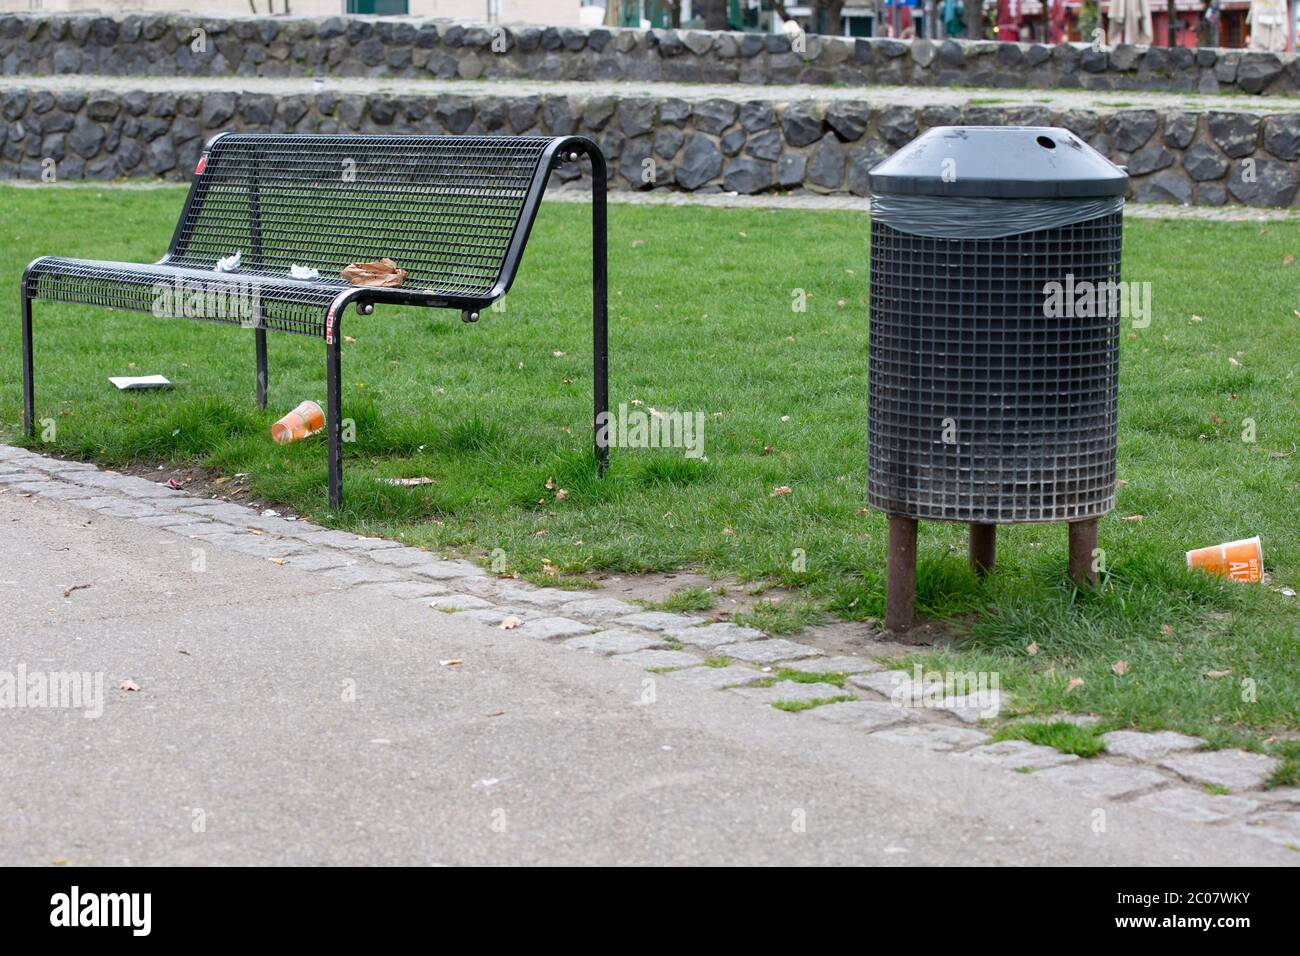 Liegengelassener Müll trotz Mülleimer in der Coronakrise. Köln, 19.03.2020 Foto Stock